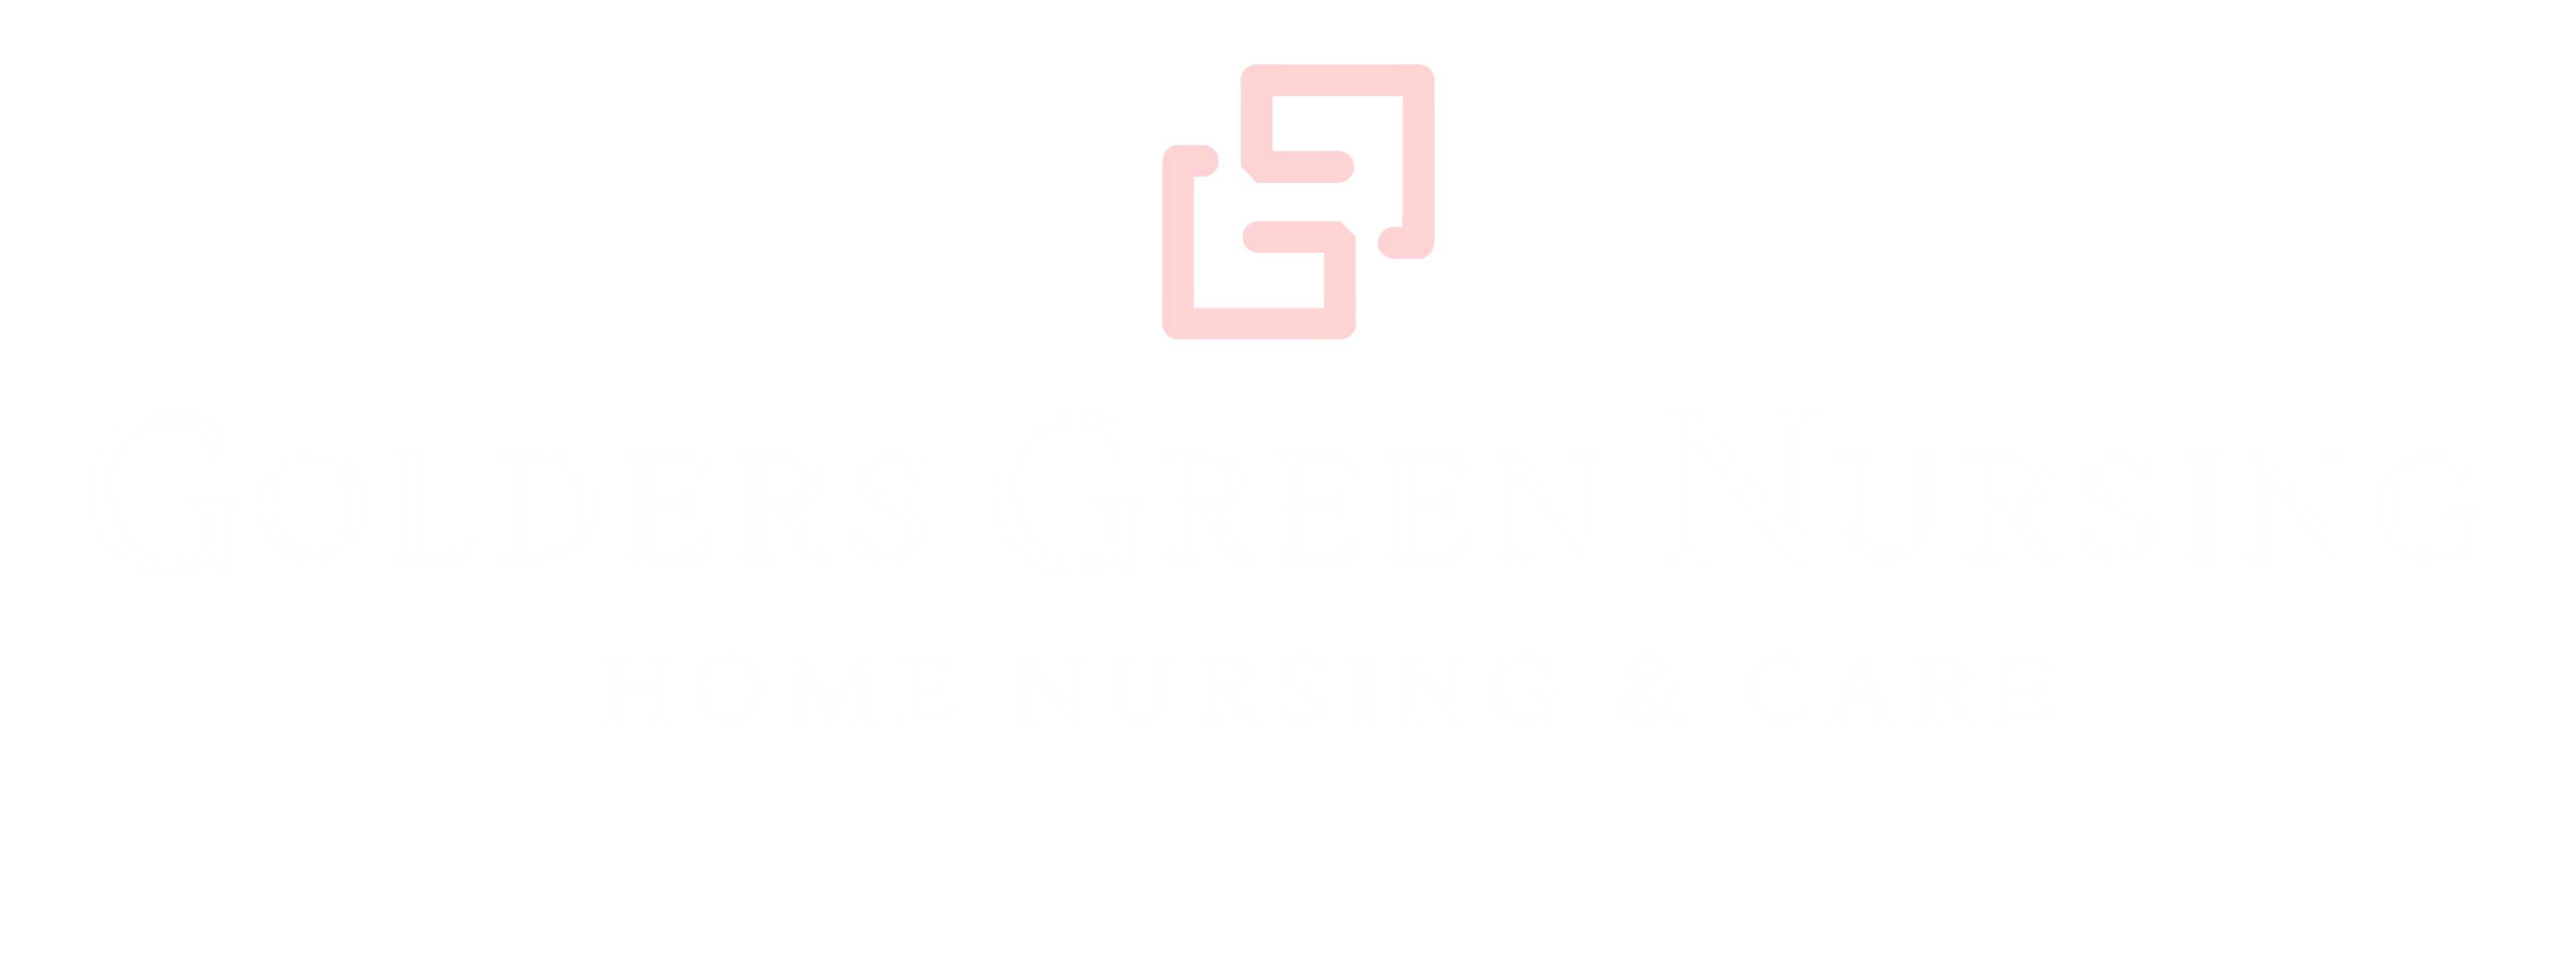 GGN logo white